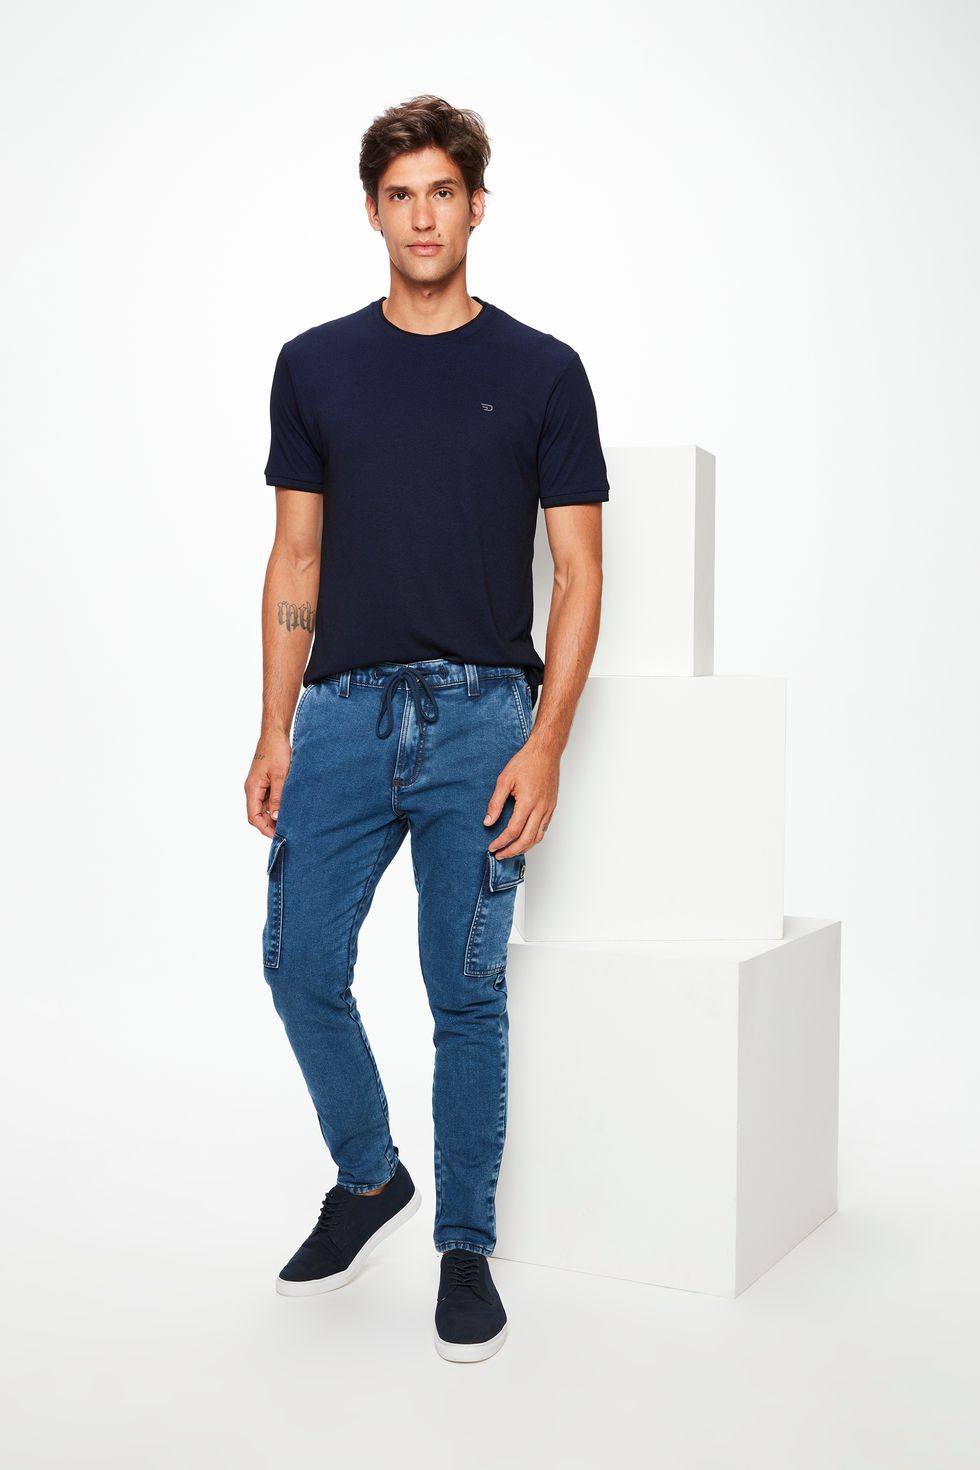 Calças Masculinas de Luxo - Jeans, Jogger, Cargo e Social